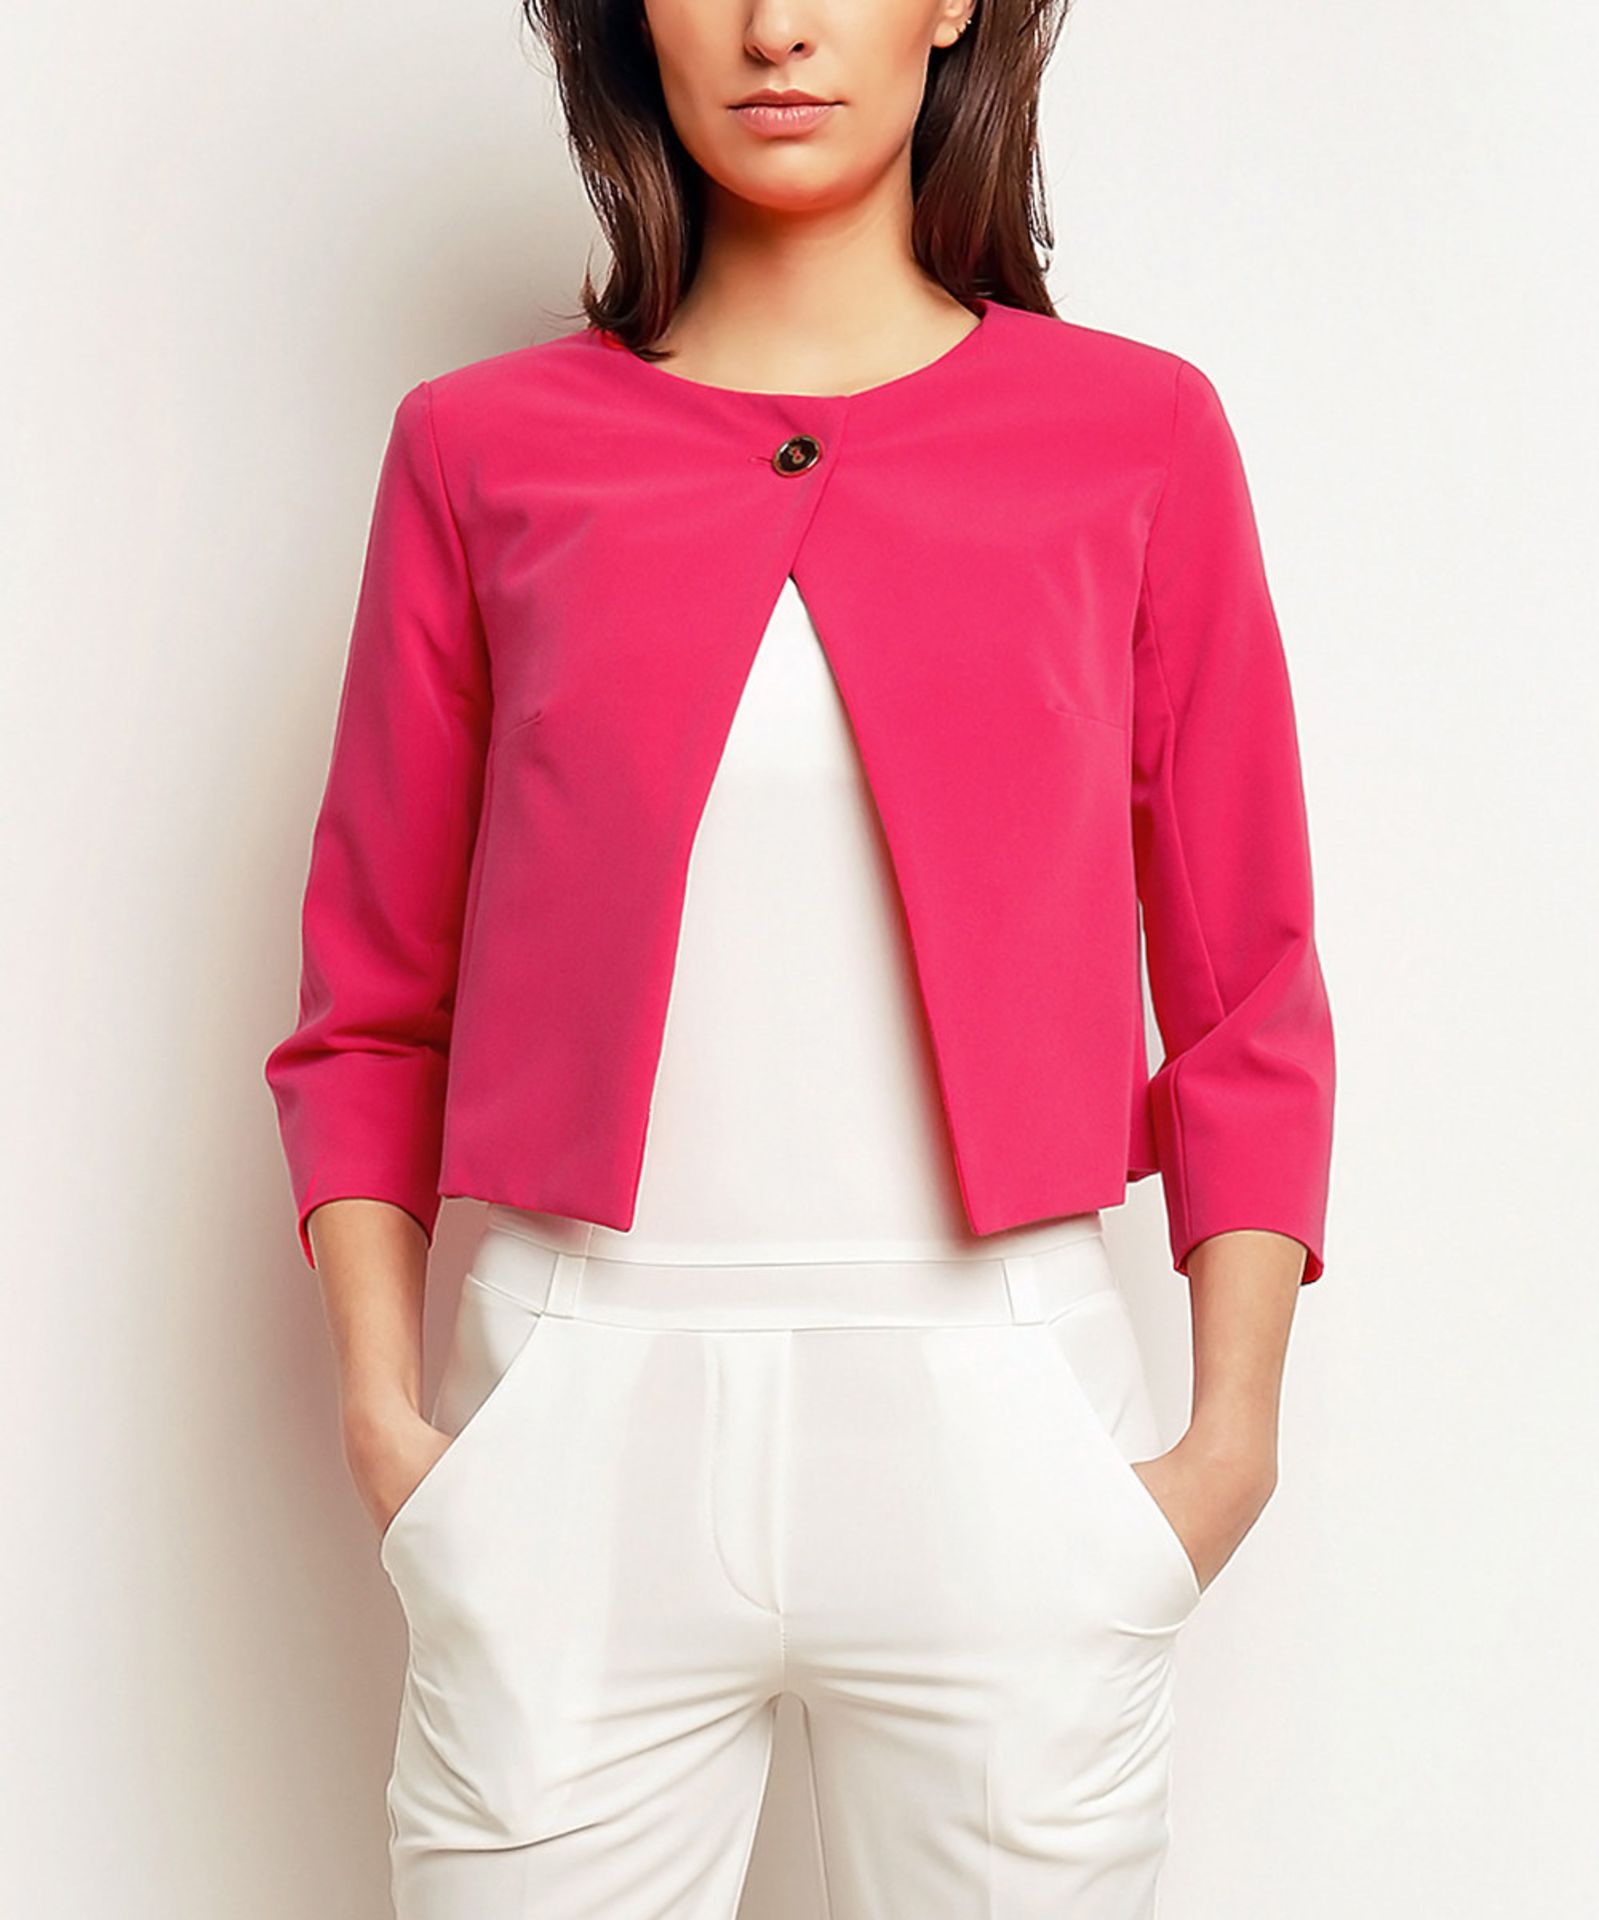 Karen Karen Pink Crop Jacket (Us Size: XS) [Ref: 37868710]